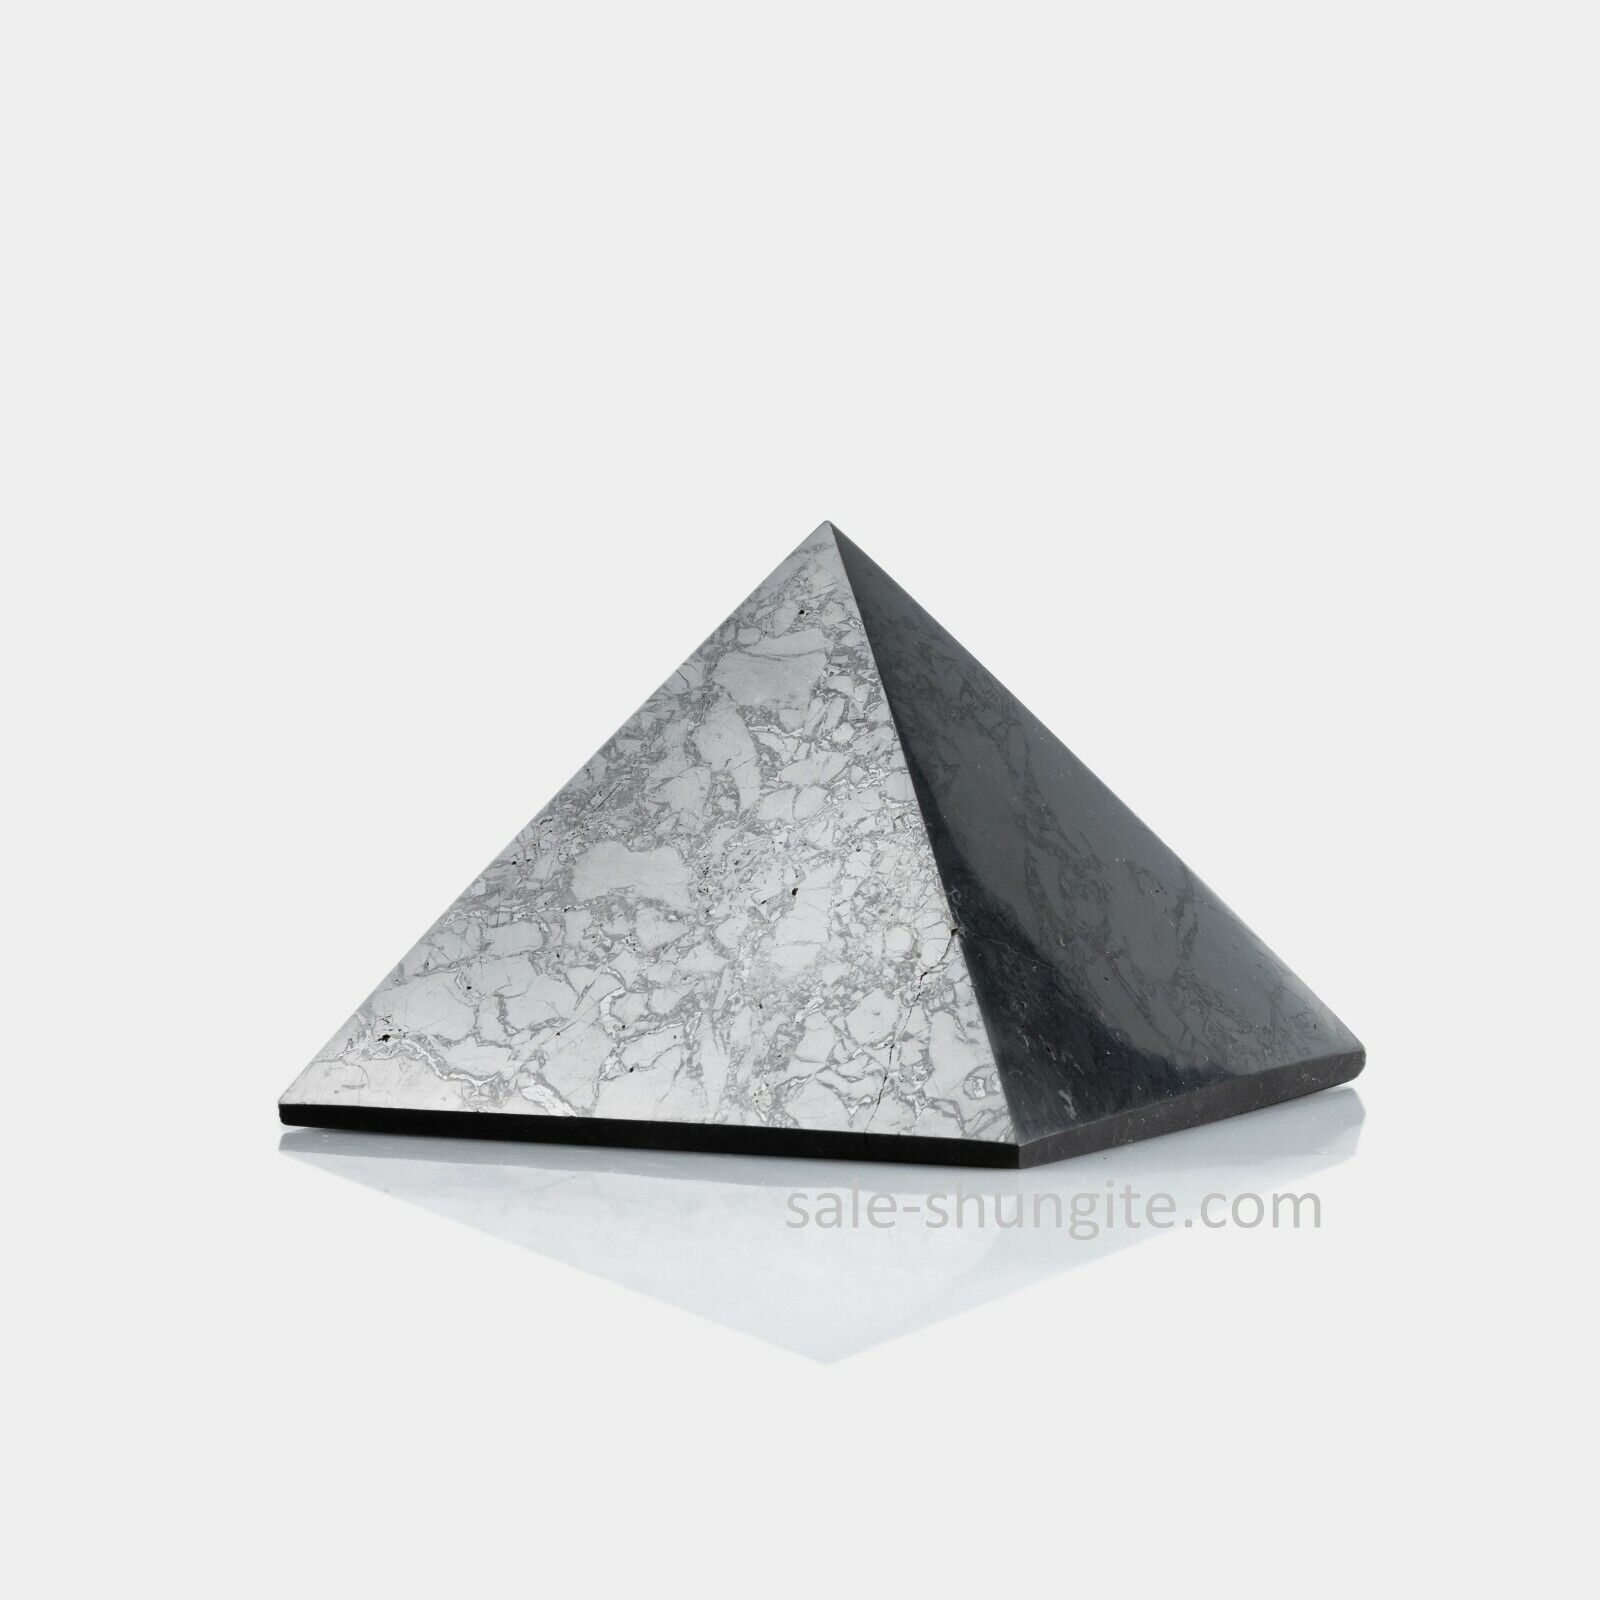 Polished shungite pyramid 100x100mm (3,94 inches) Karelia EMF protection